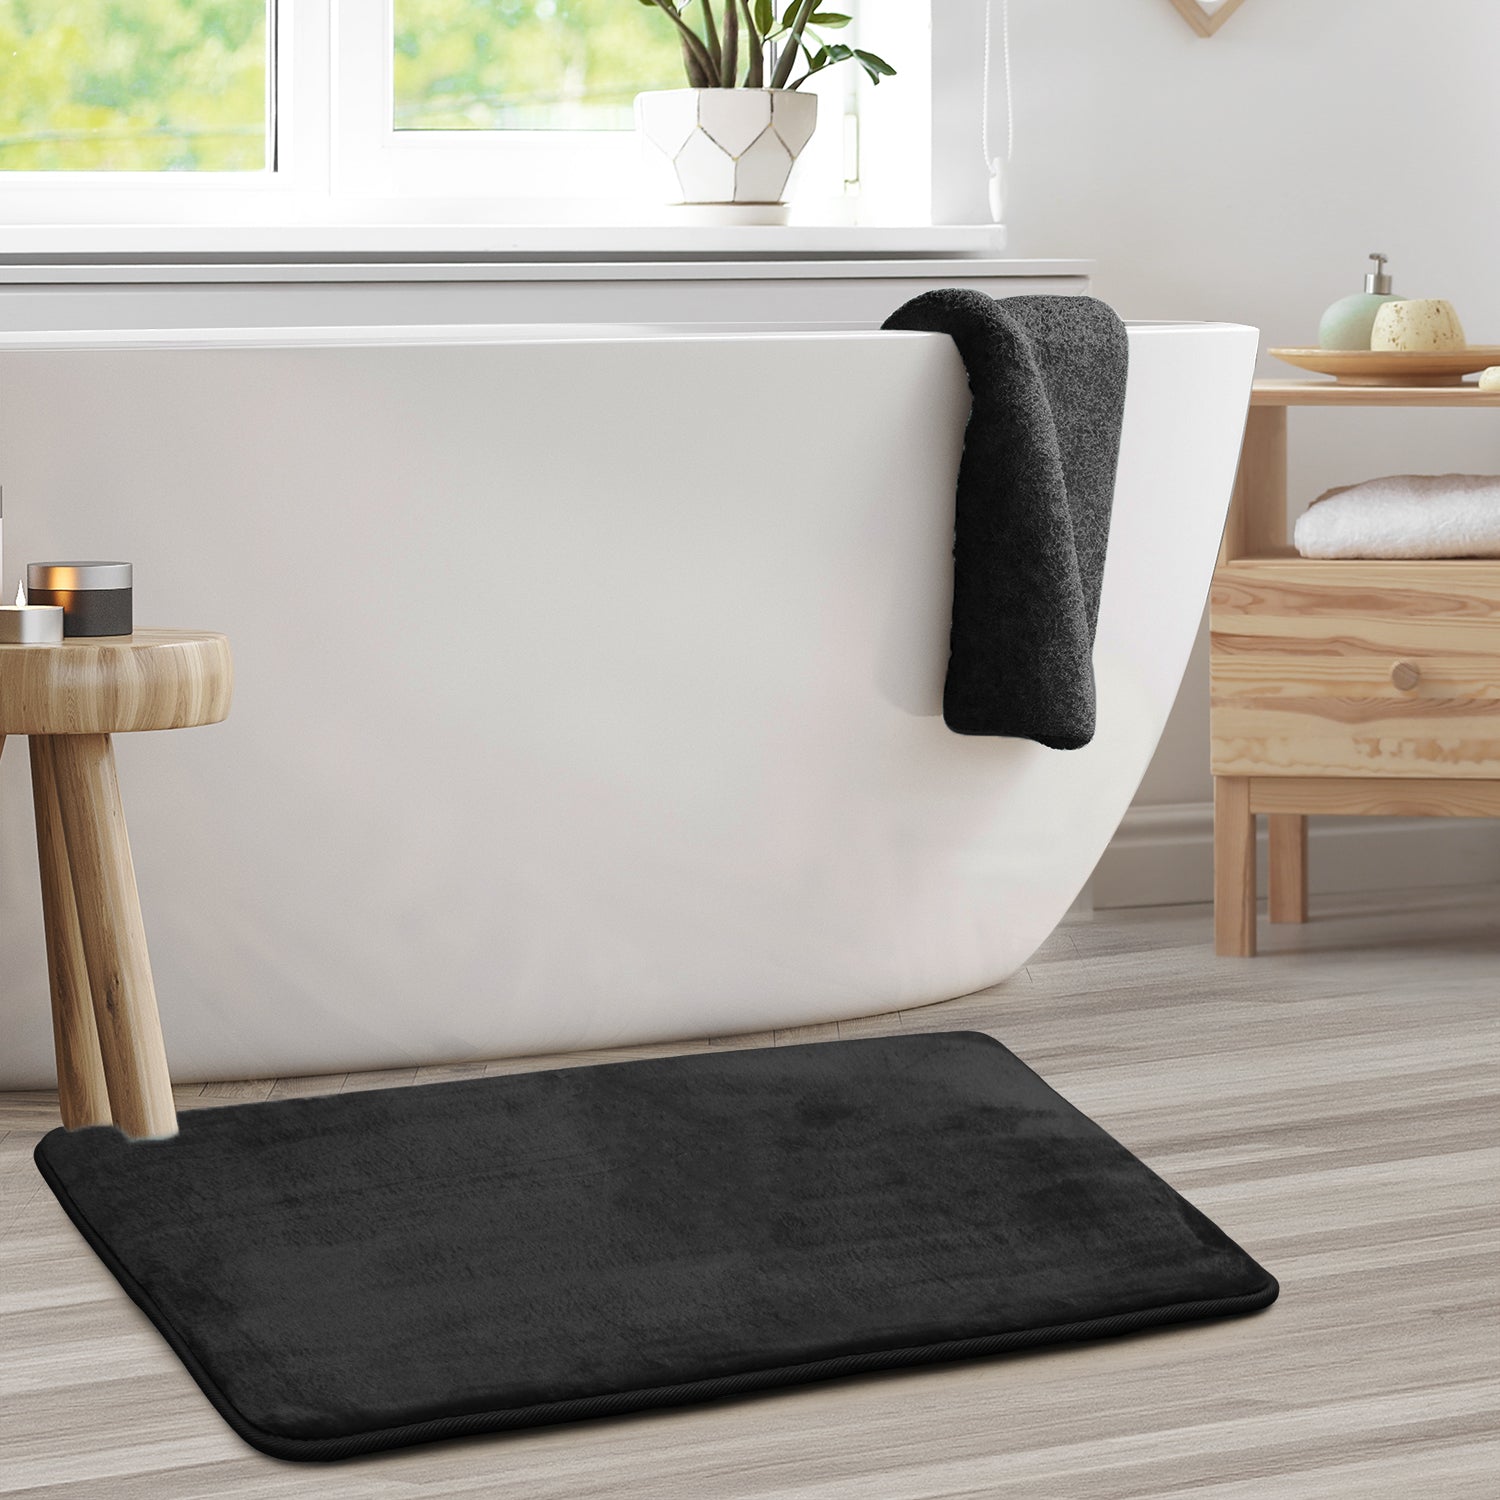 1p Memory Foam Bath Bathmat, Anti-skid Durable Floor Rug, Cozy